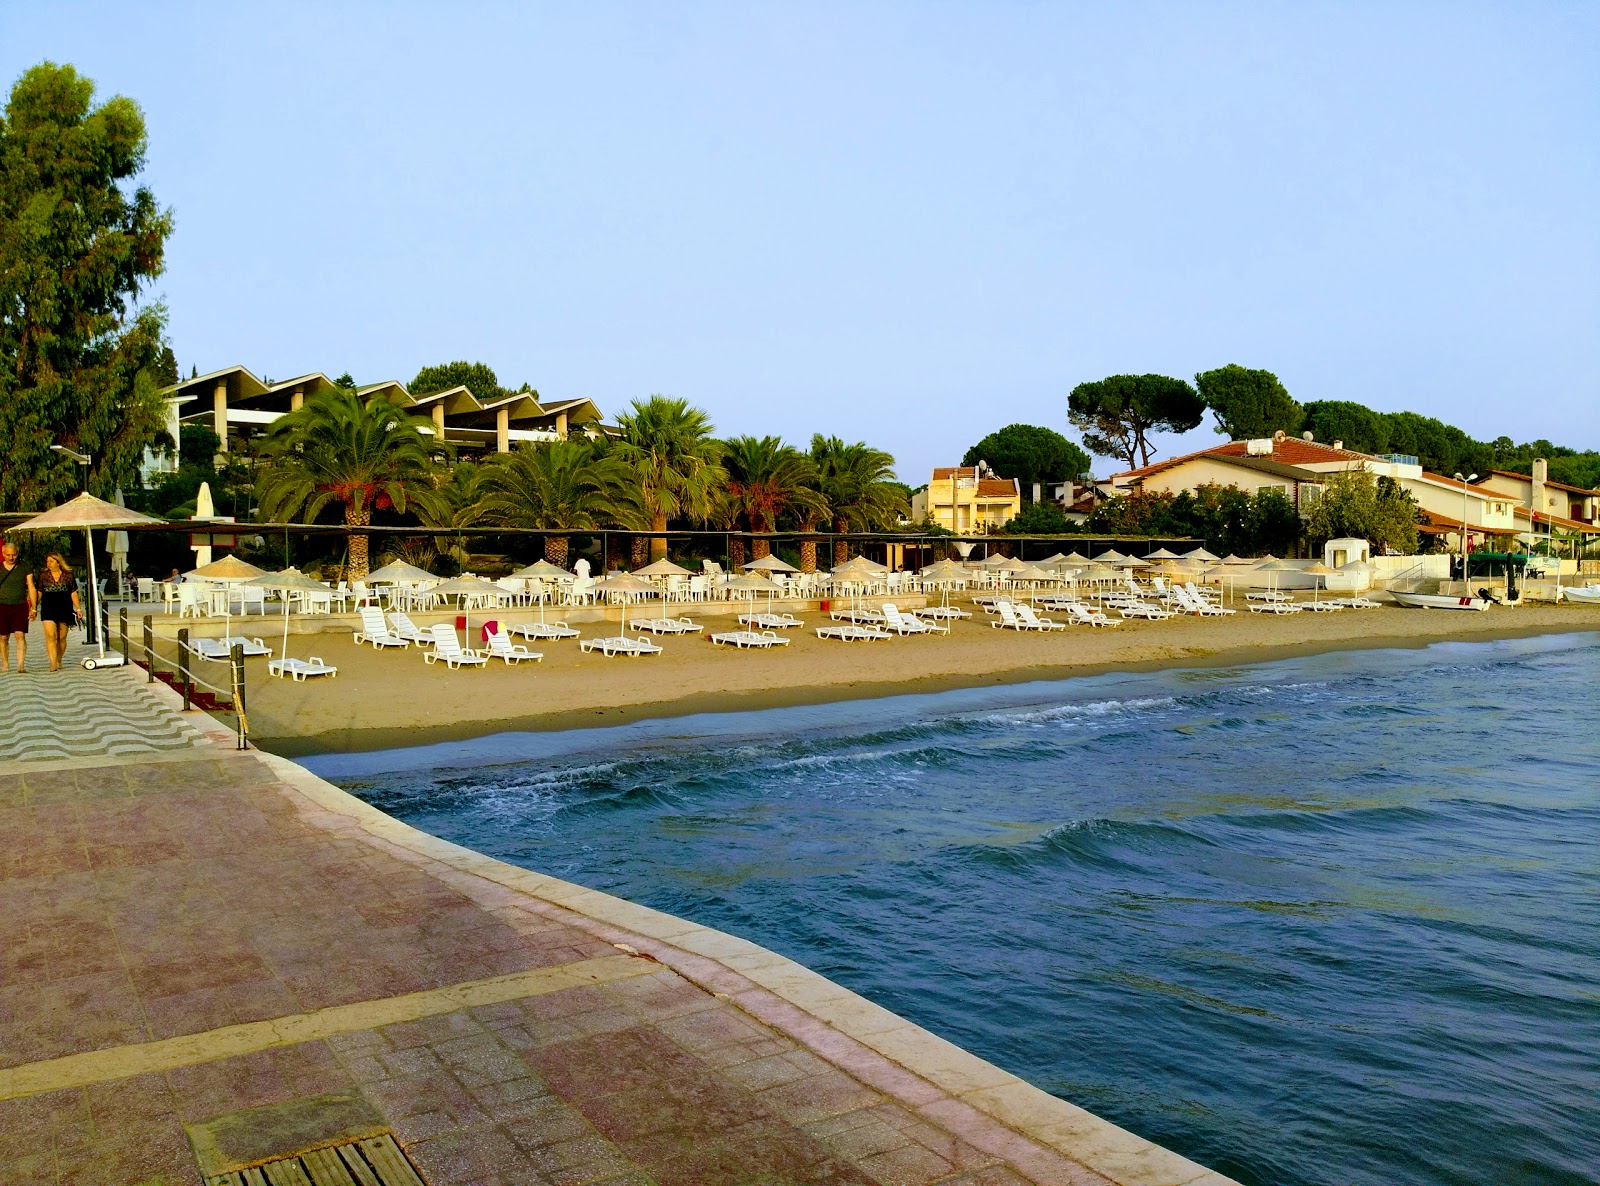 Photo of Kalemlik plaji amenities area